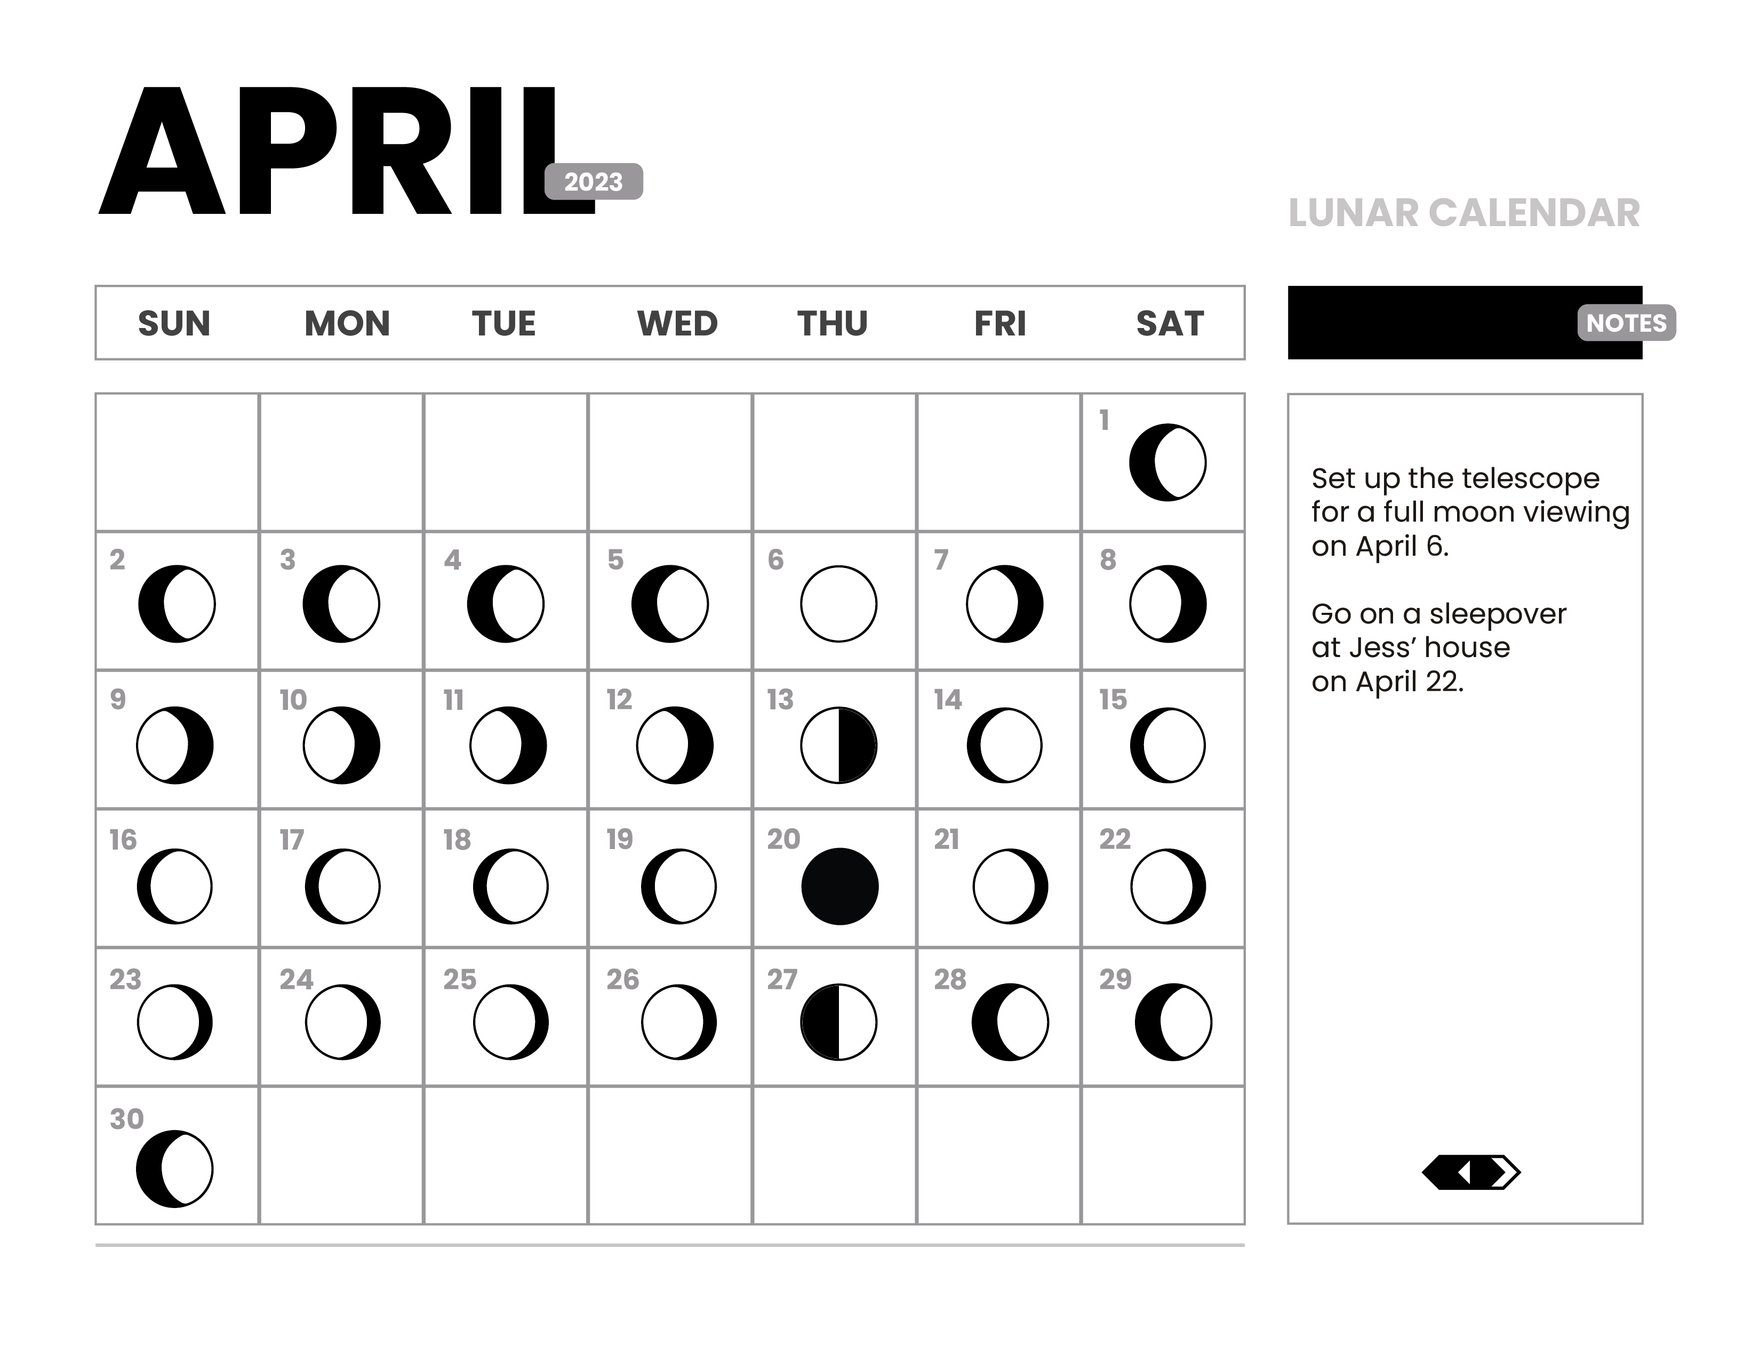 Lunar Calendar April 2023